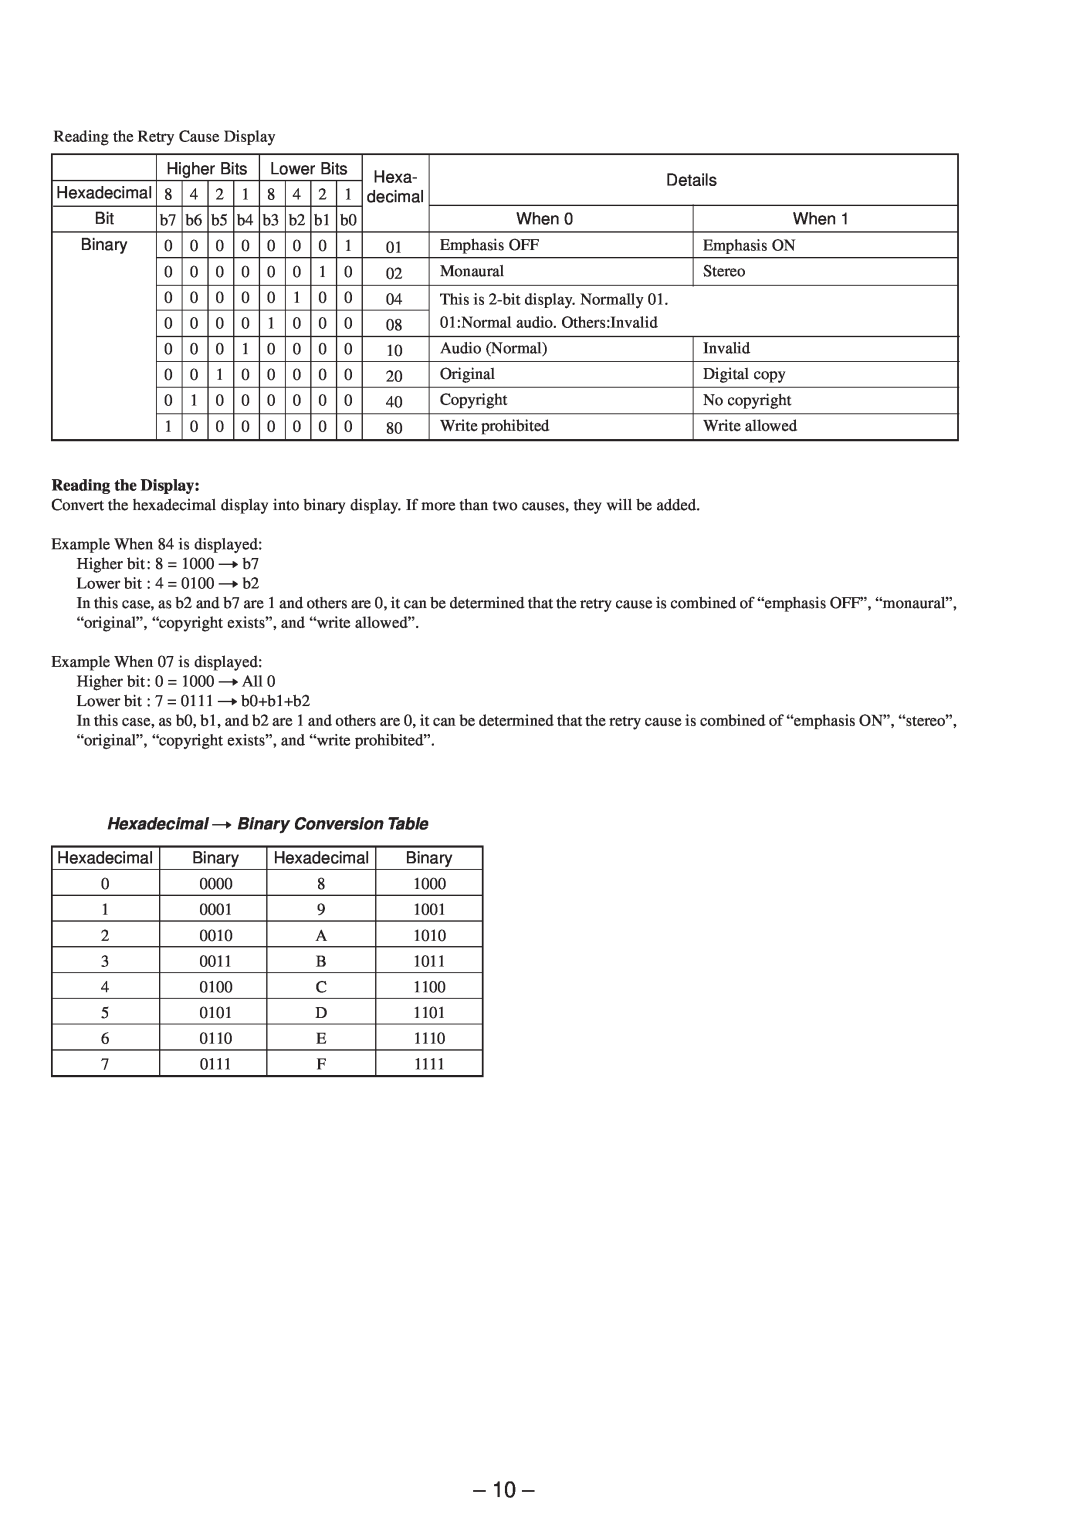 Sony MDS-JB920 service manual 10, Reading the Display, Hexadecimal nBinary Conversion Table 